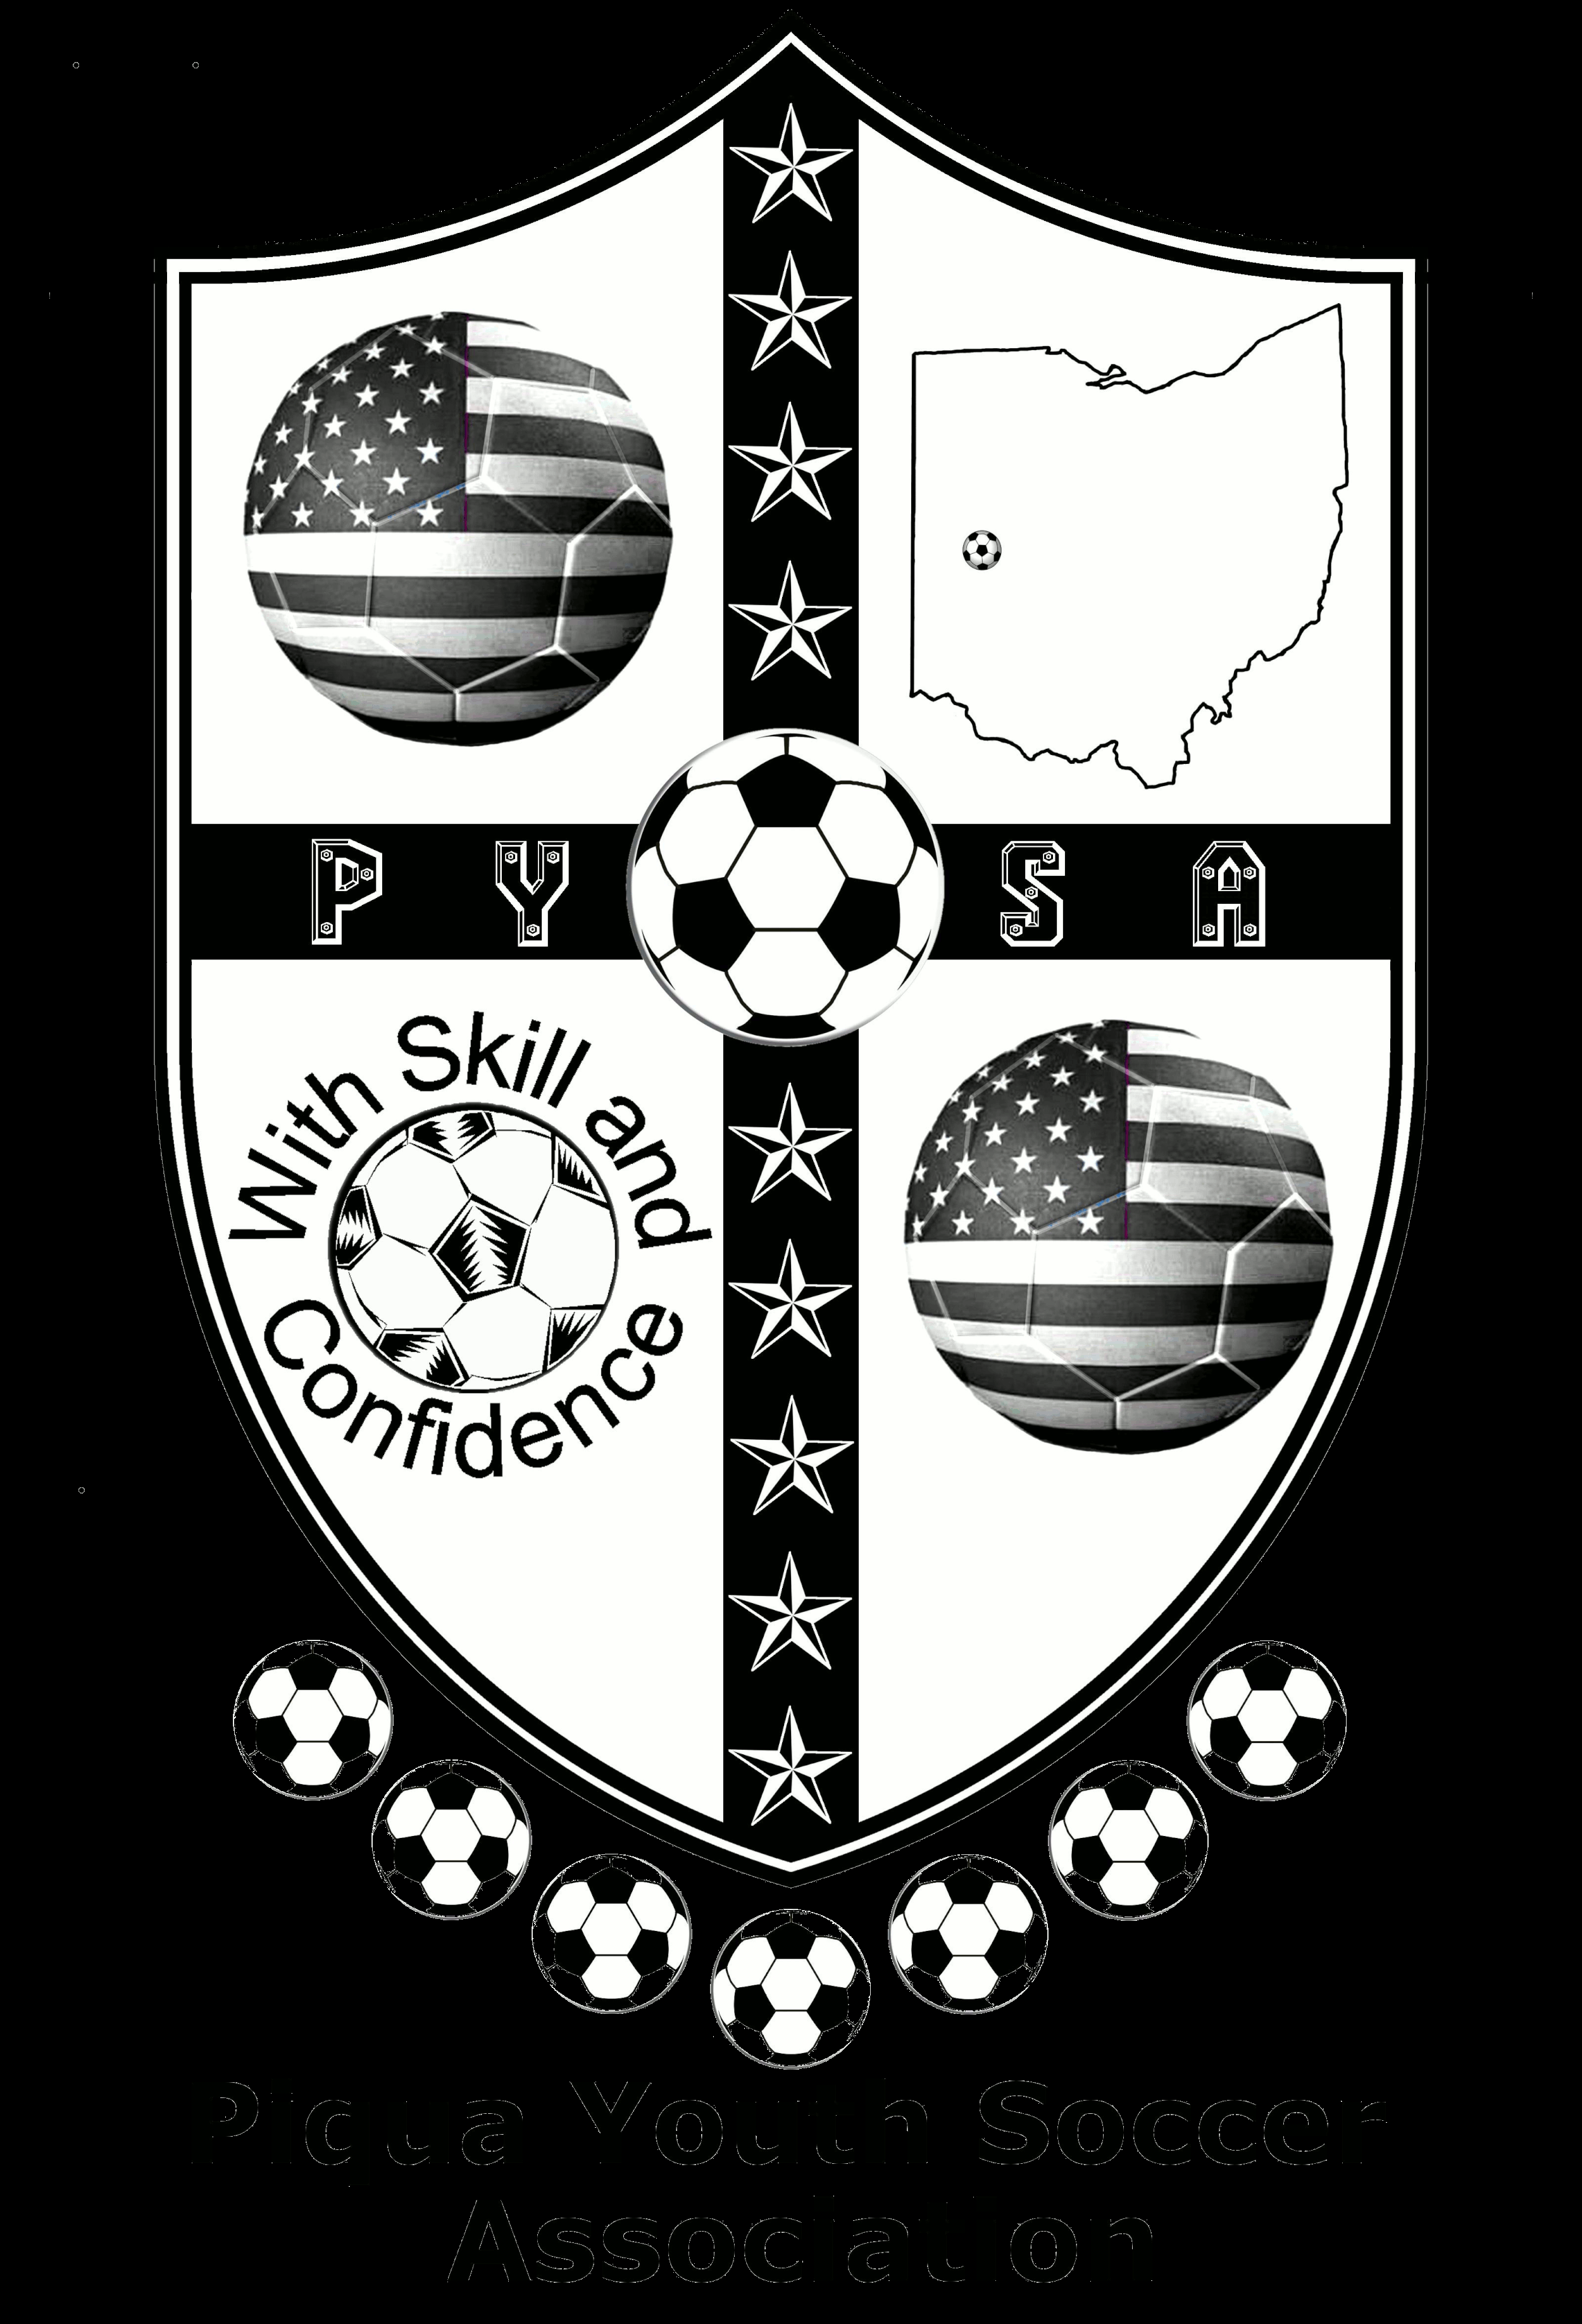 Piqua Youth Soccer Association